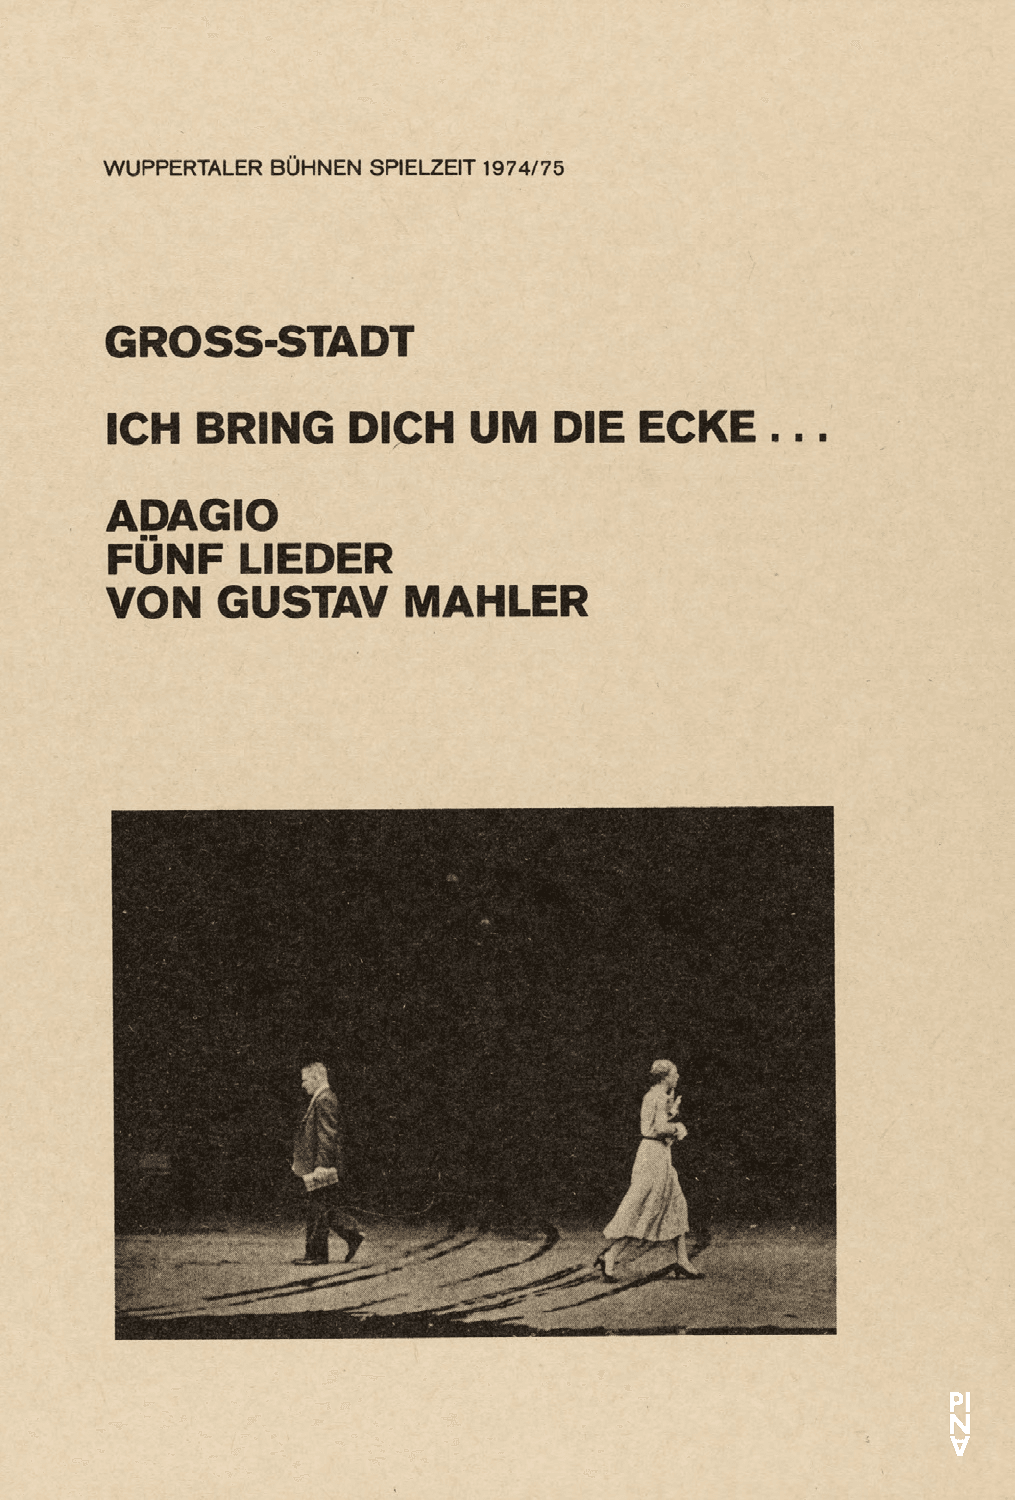 Programme pour « Adagio – Fünf Lieder von Gustav Mahler » et « Ich bring dich um die Ecke… » de Pina Bausch avec Tanztheater Wuppertal et « Gross-Stadt » de Kurt Jooss avec Tanztheater Wuppertal à Wuppertal, 8 décembre 1974